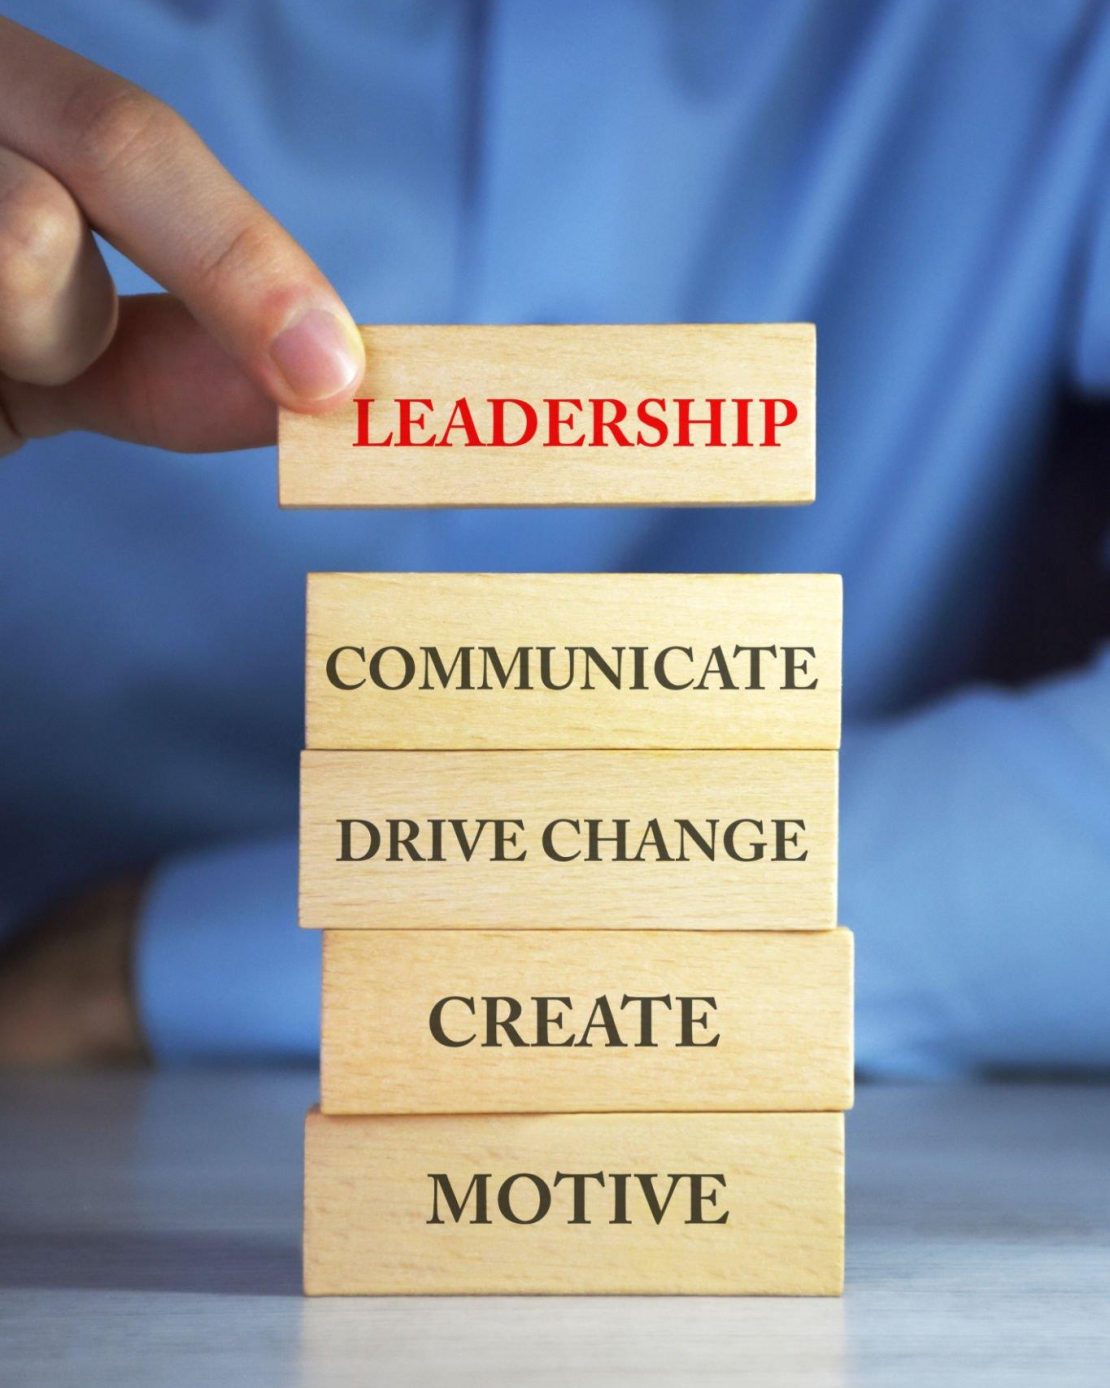 leadership images